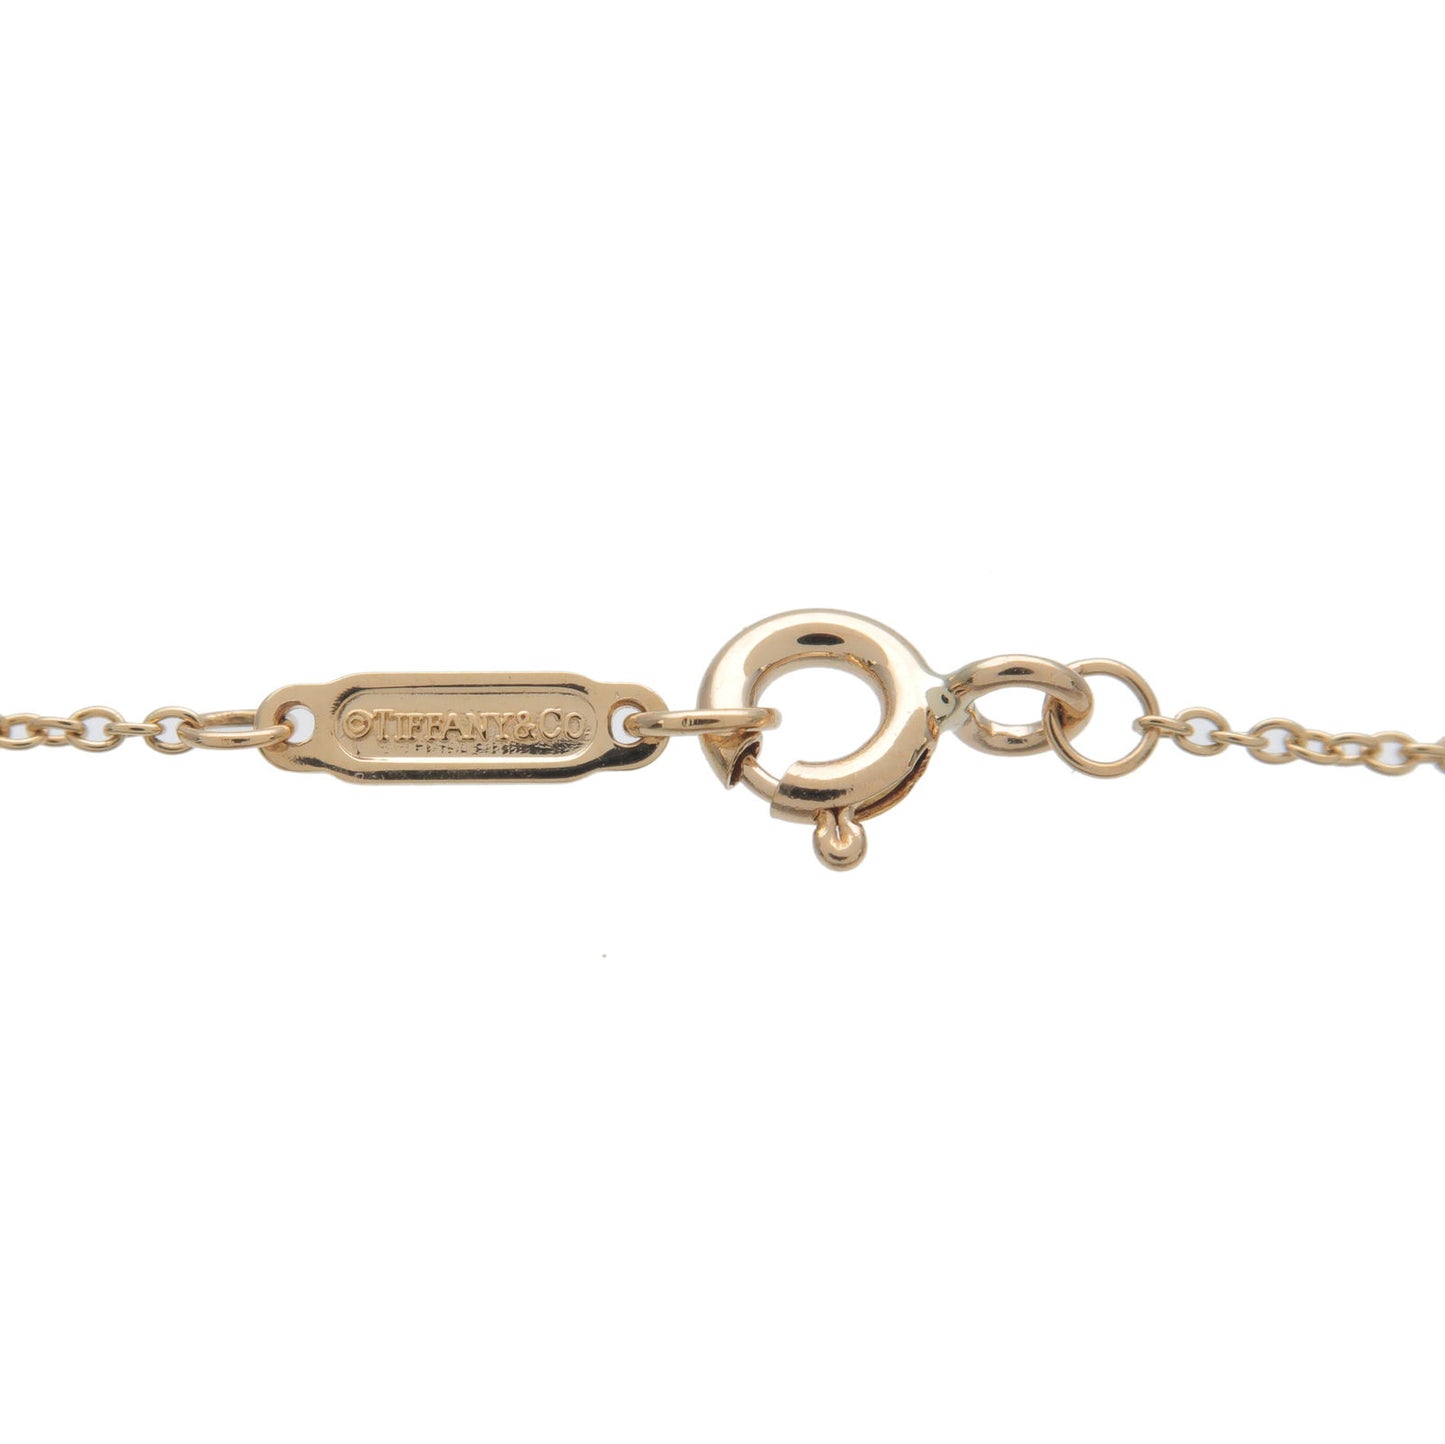 Tiffany&Co. 1837 Interlocking Circle Necklace K18YG 750YG